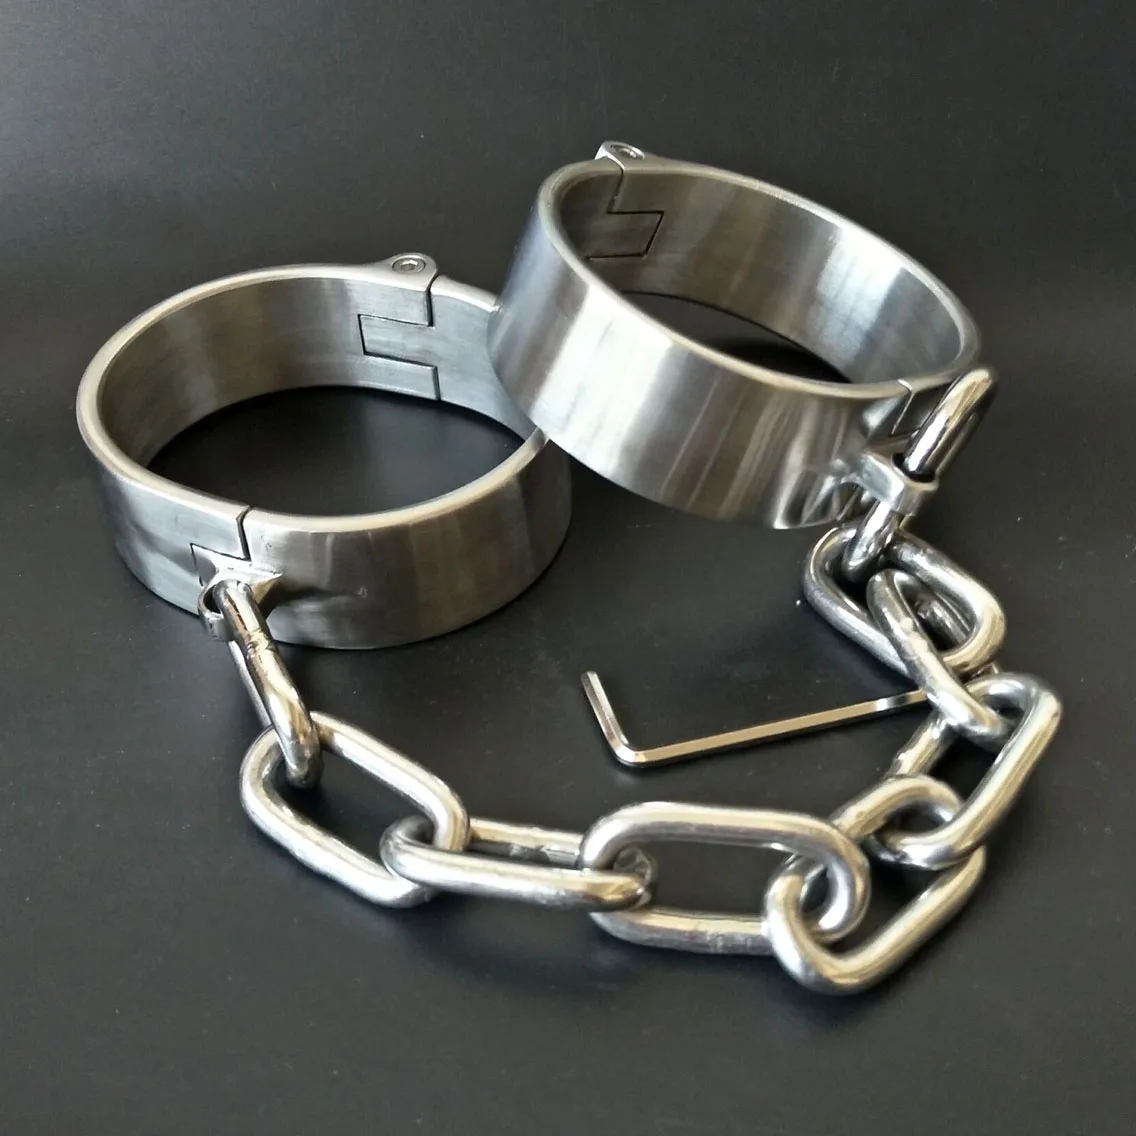 

Metal Leg Irons Stainless Steel Ankle Cuffs Adult Games BDSM Bondage Erotic Sex Toys For Couples Slave Restraints Legcuffs